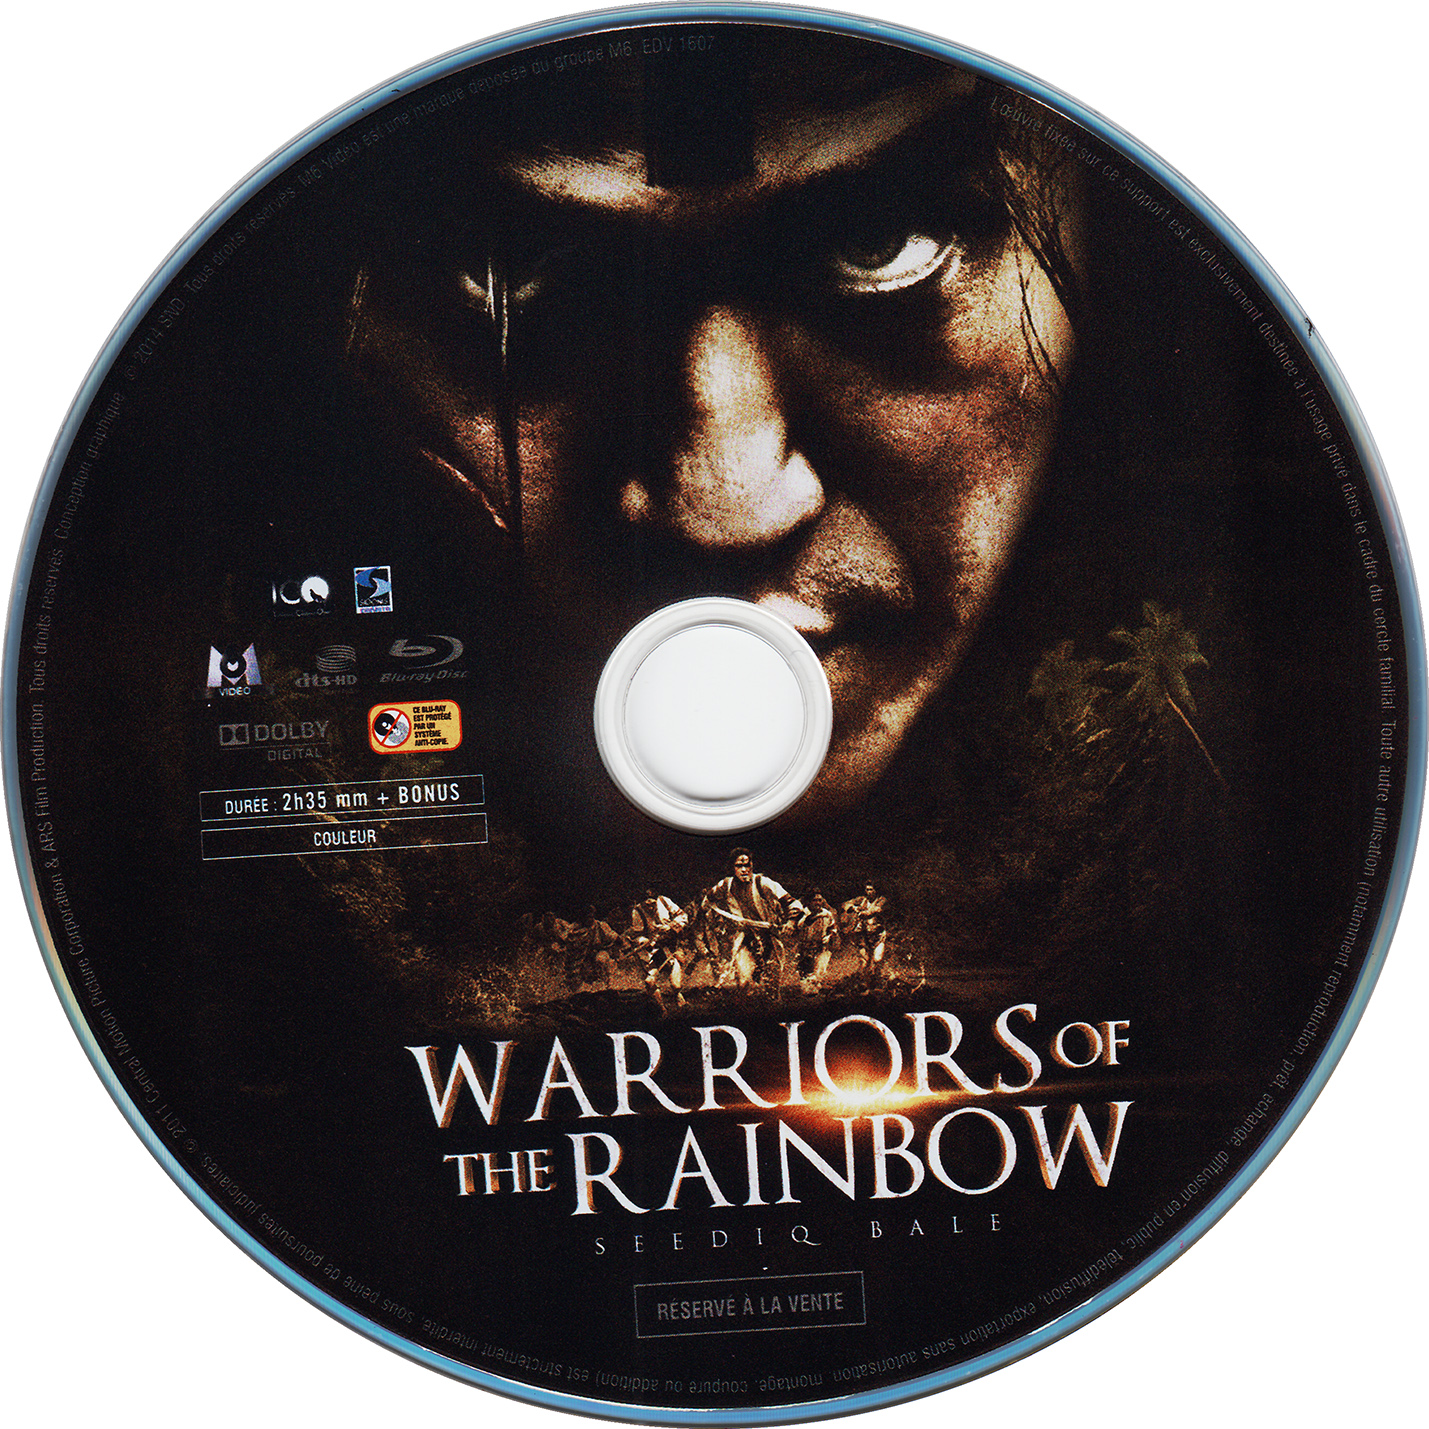 Warriors of the rainbow (BLU-RAY)